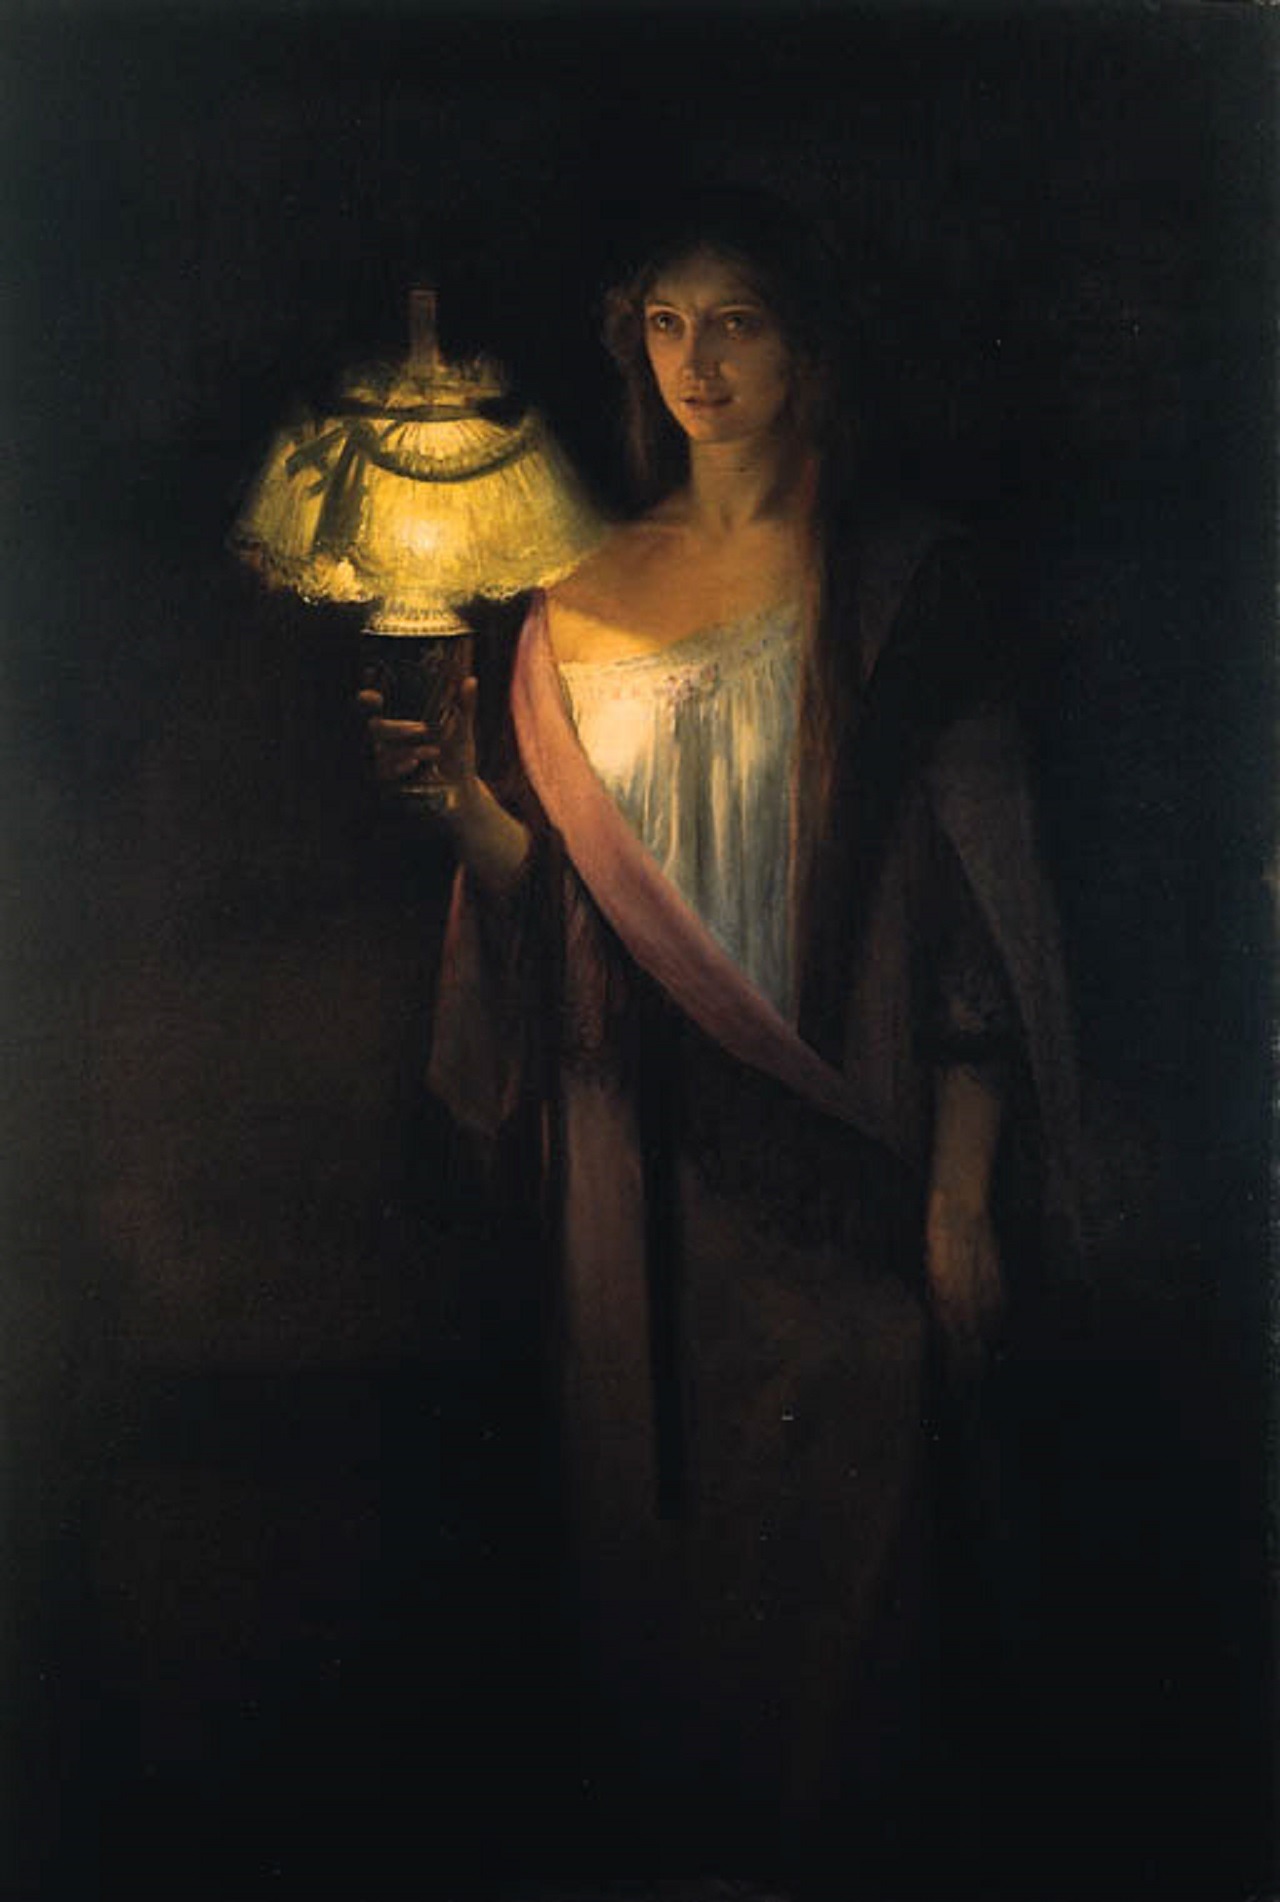 silenceformysoul:
“Édouard Rosset-Granger - The Sleepwalker, 1897
”